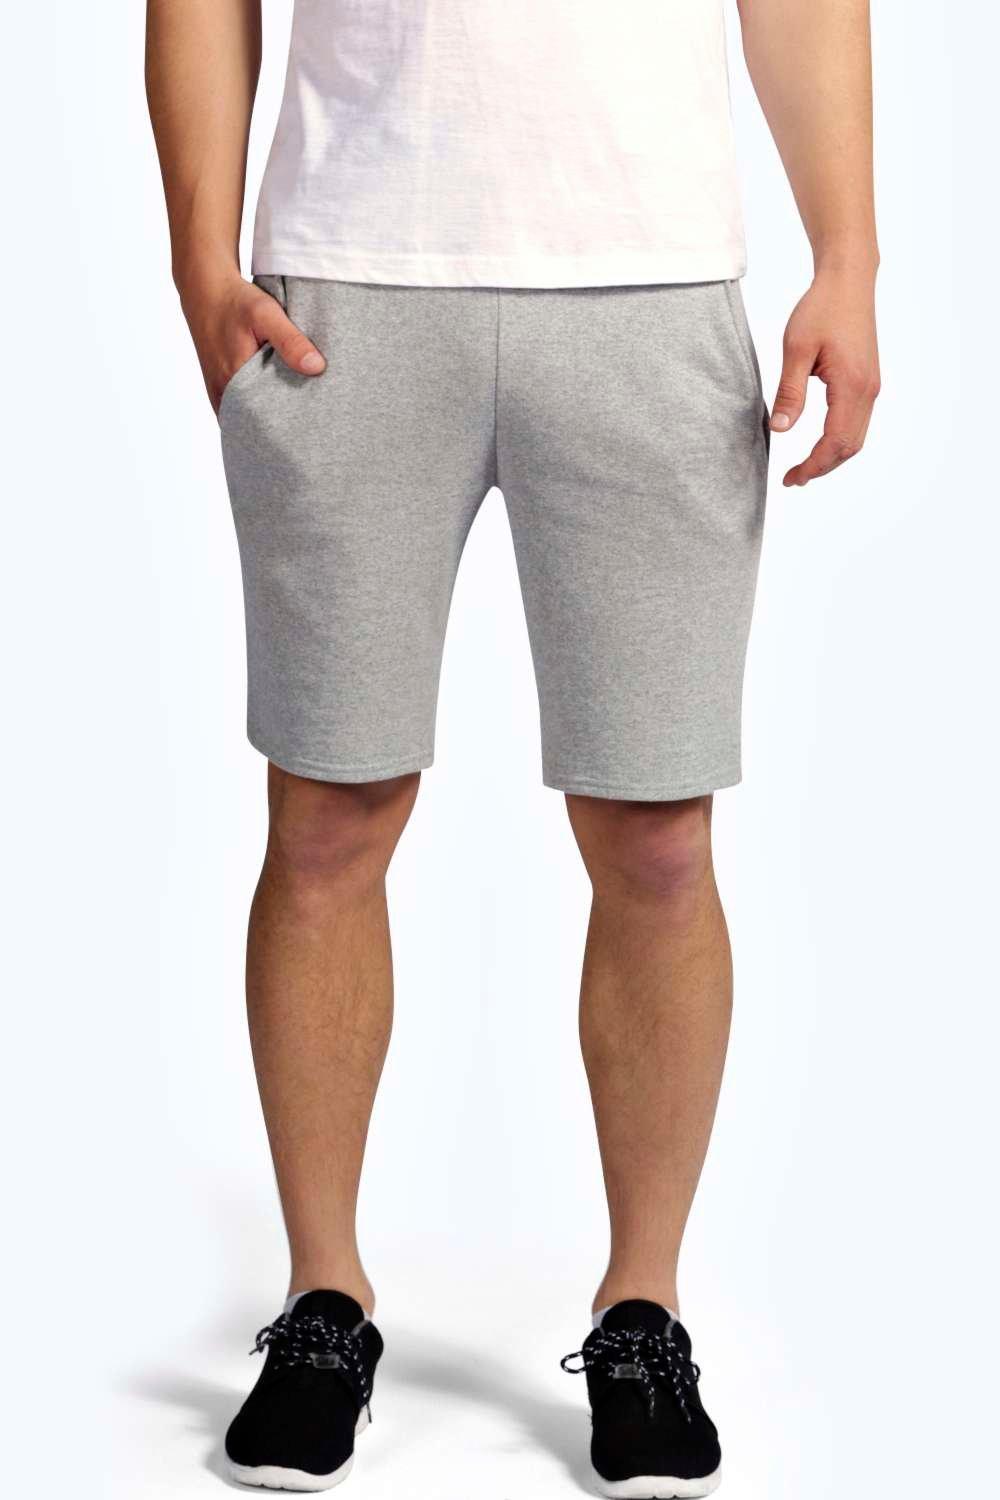 BoohooMAN Jersey Shorts in Longer Length at boohoo.com